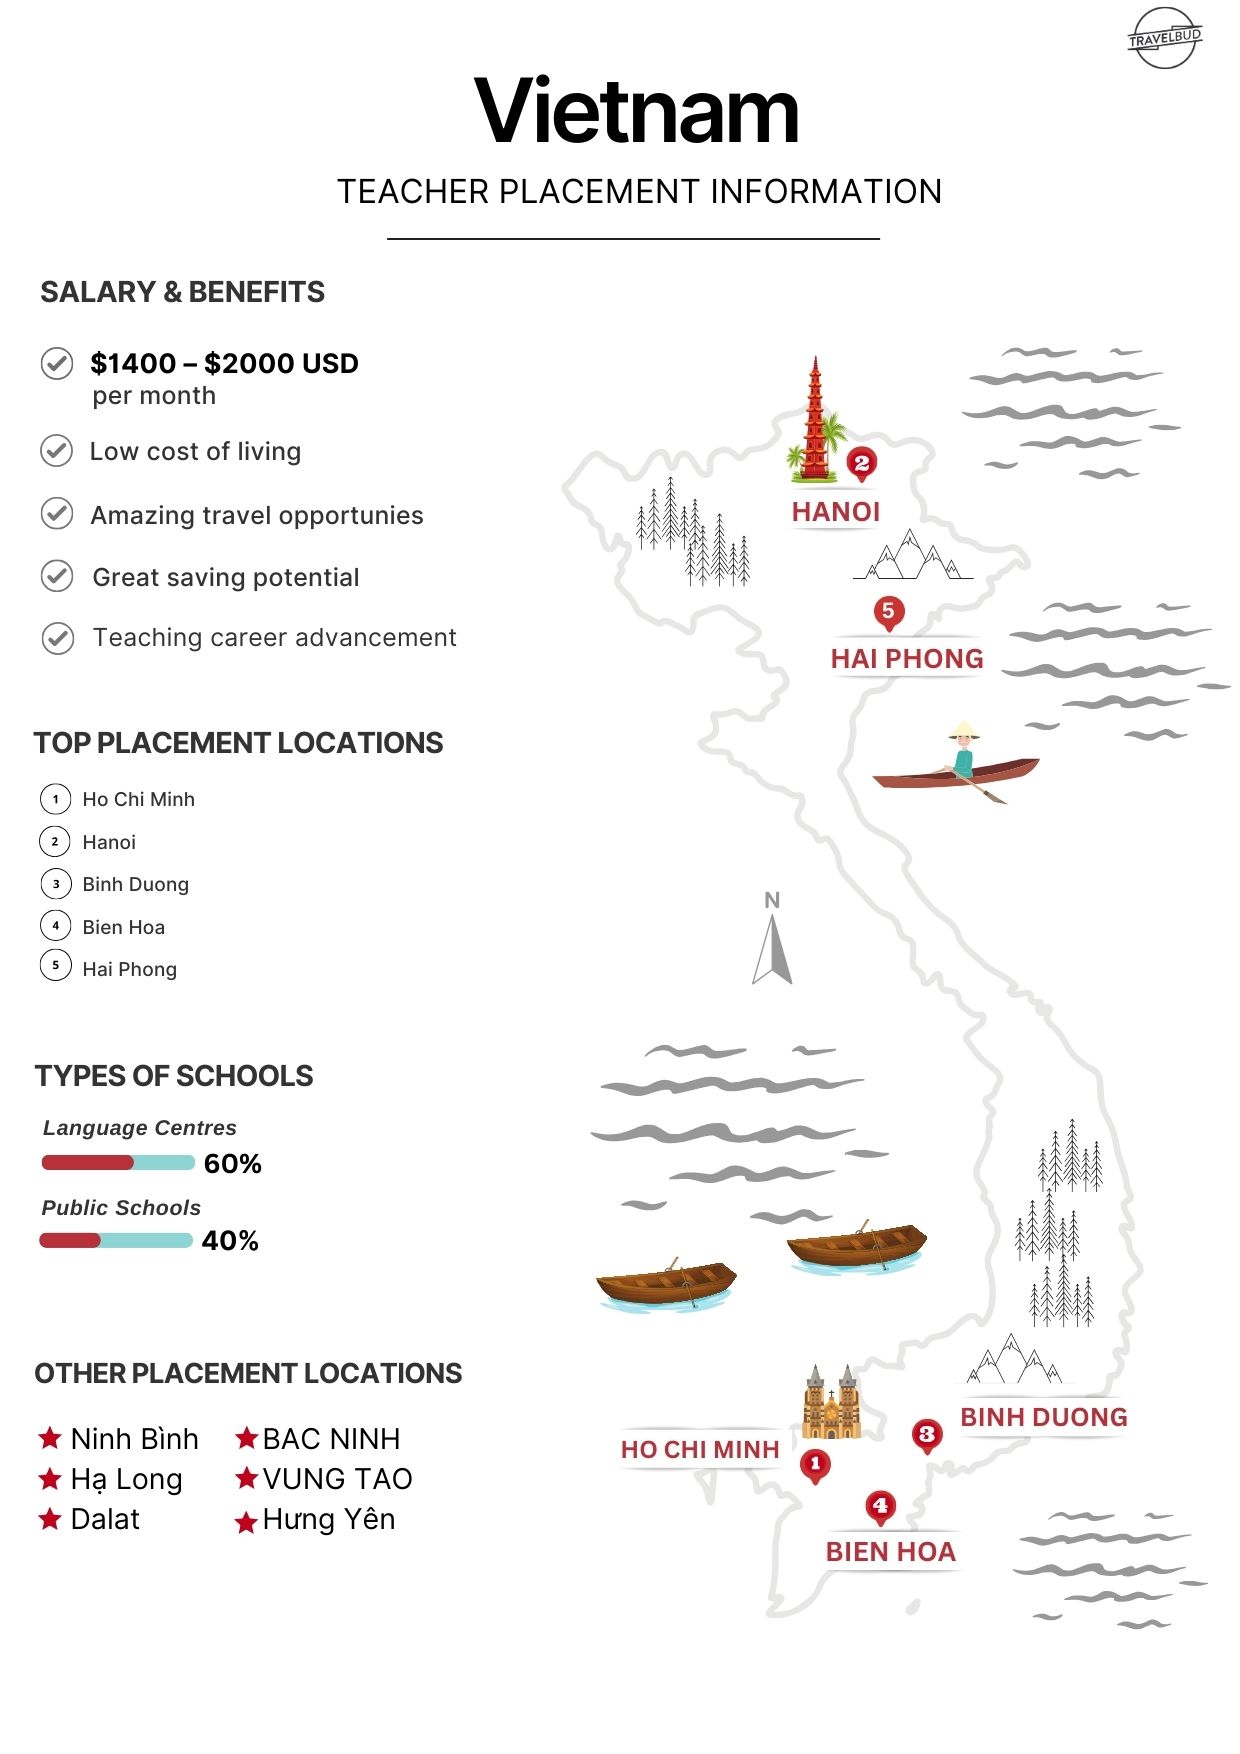 Vietnam Teacher Placement Information Infographic